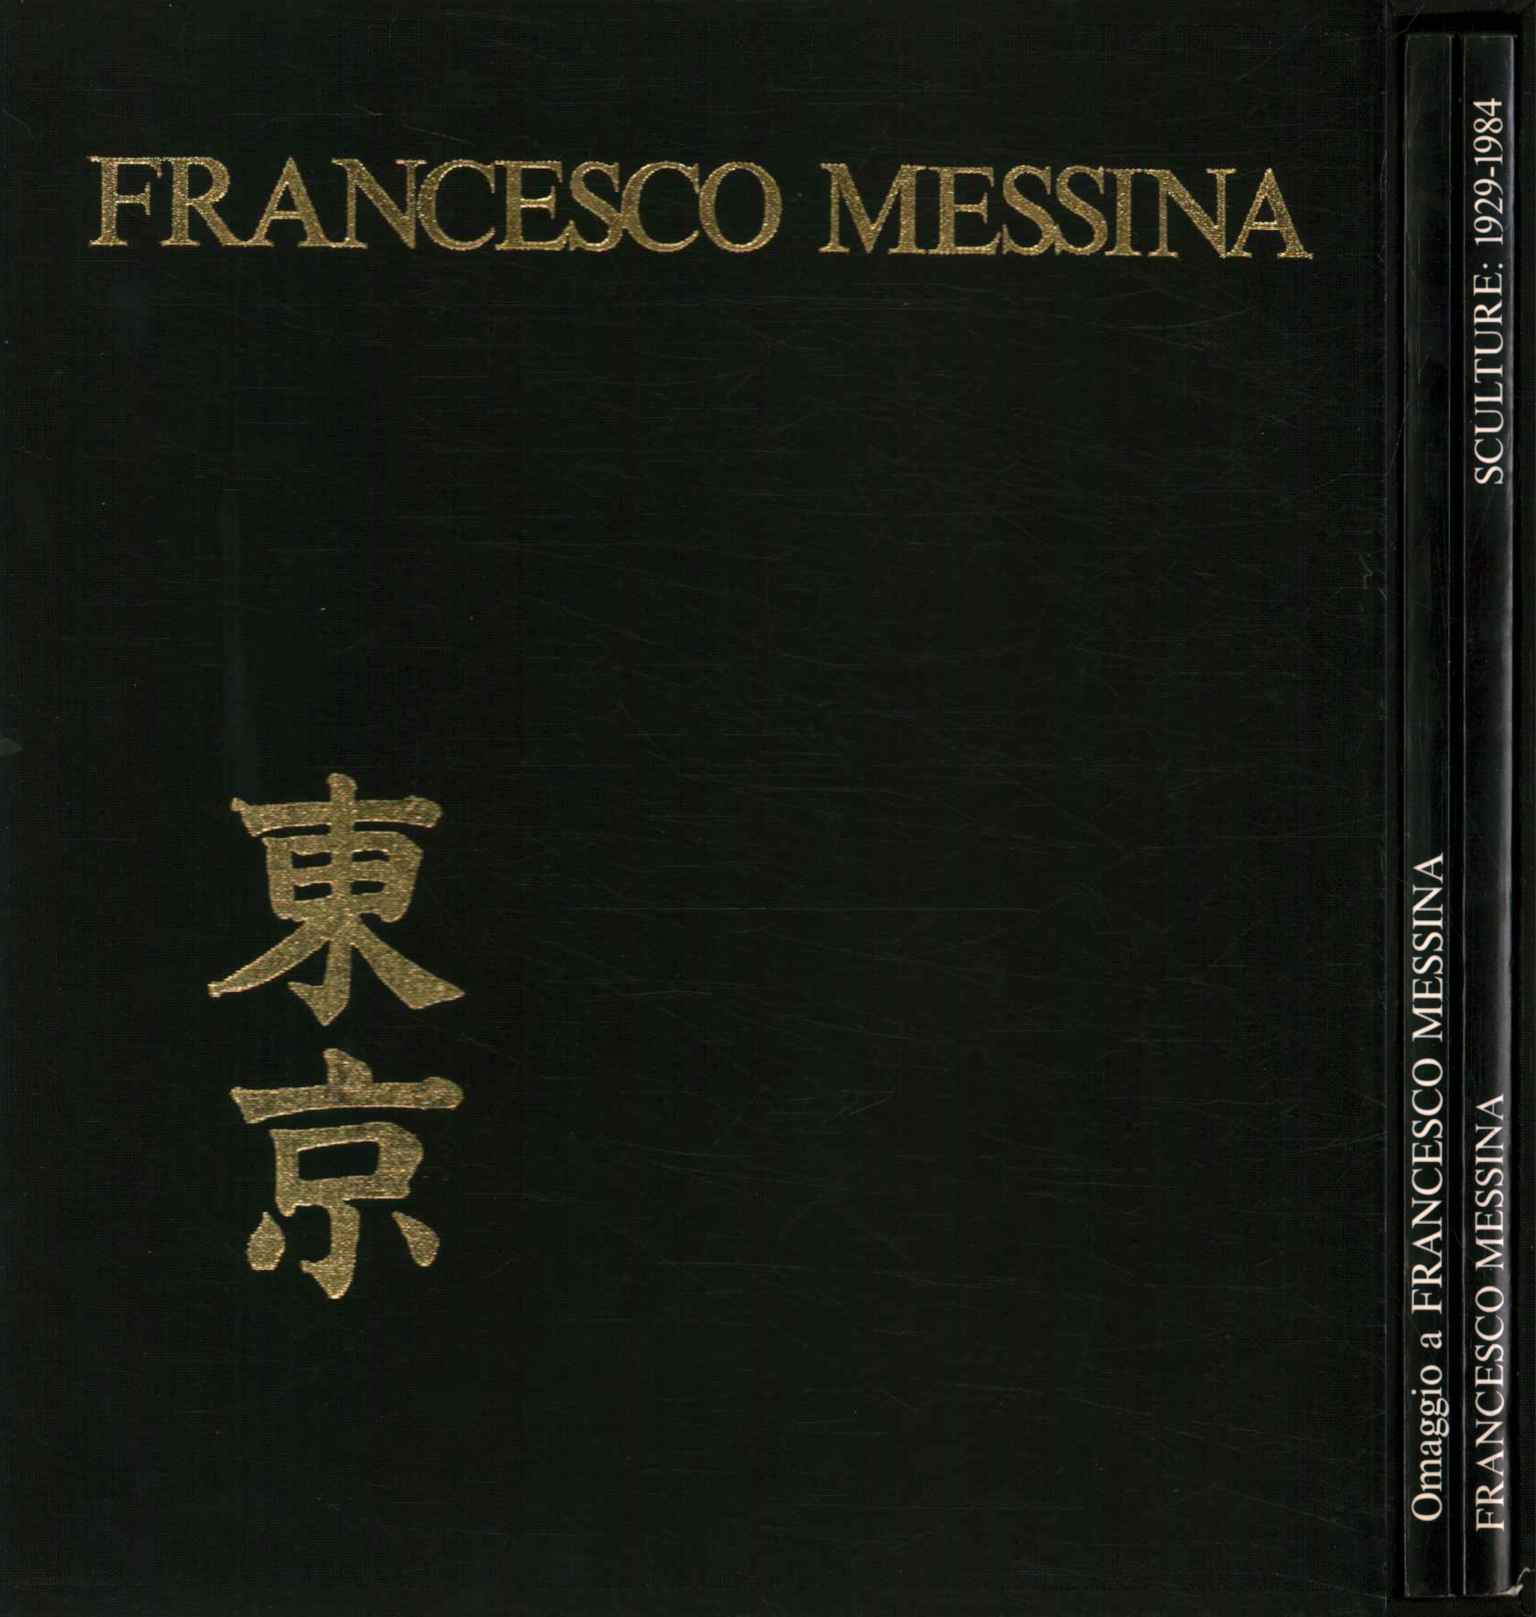 Francesco Messine. Sculptures 1929-1984 (2%2, Francesco Messina. Sculptures 1929-1984 (2%2, Francesco Messina. Sculptures 1929-1984 (2%2